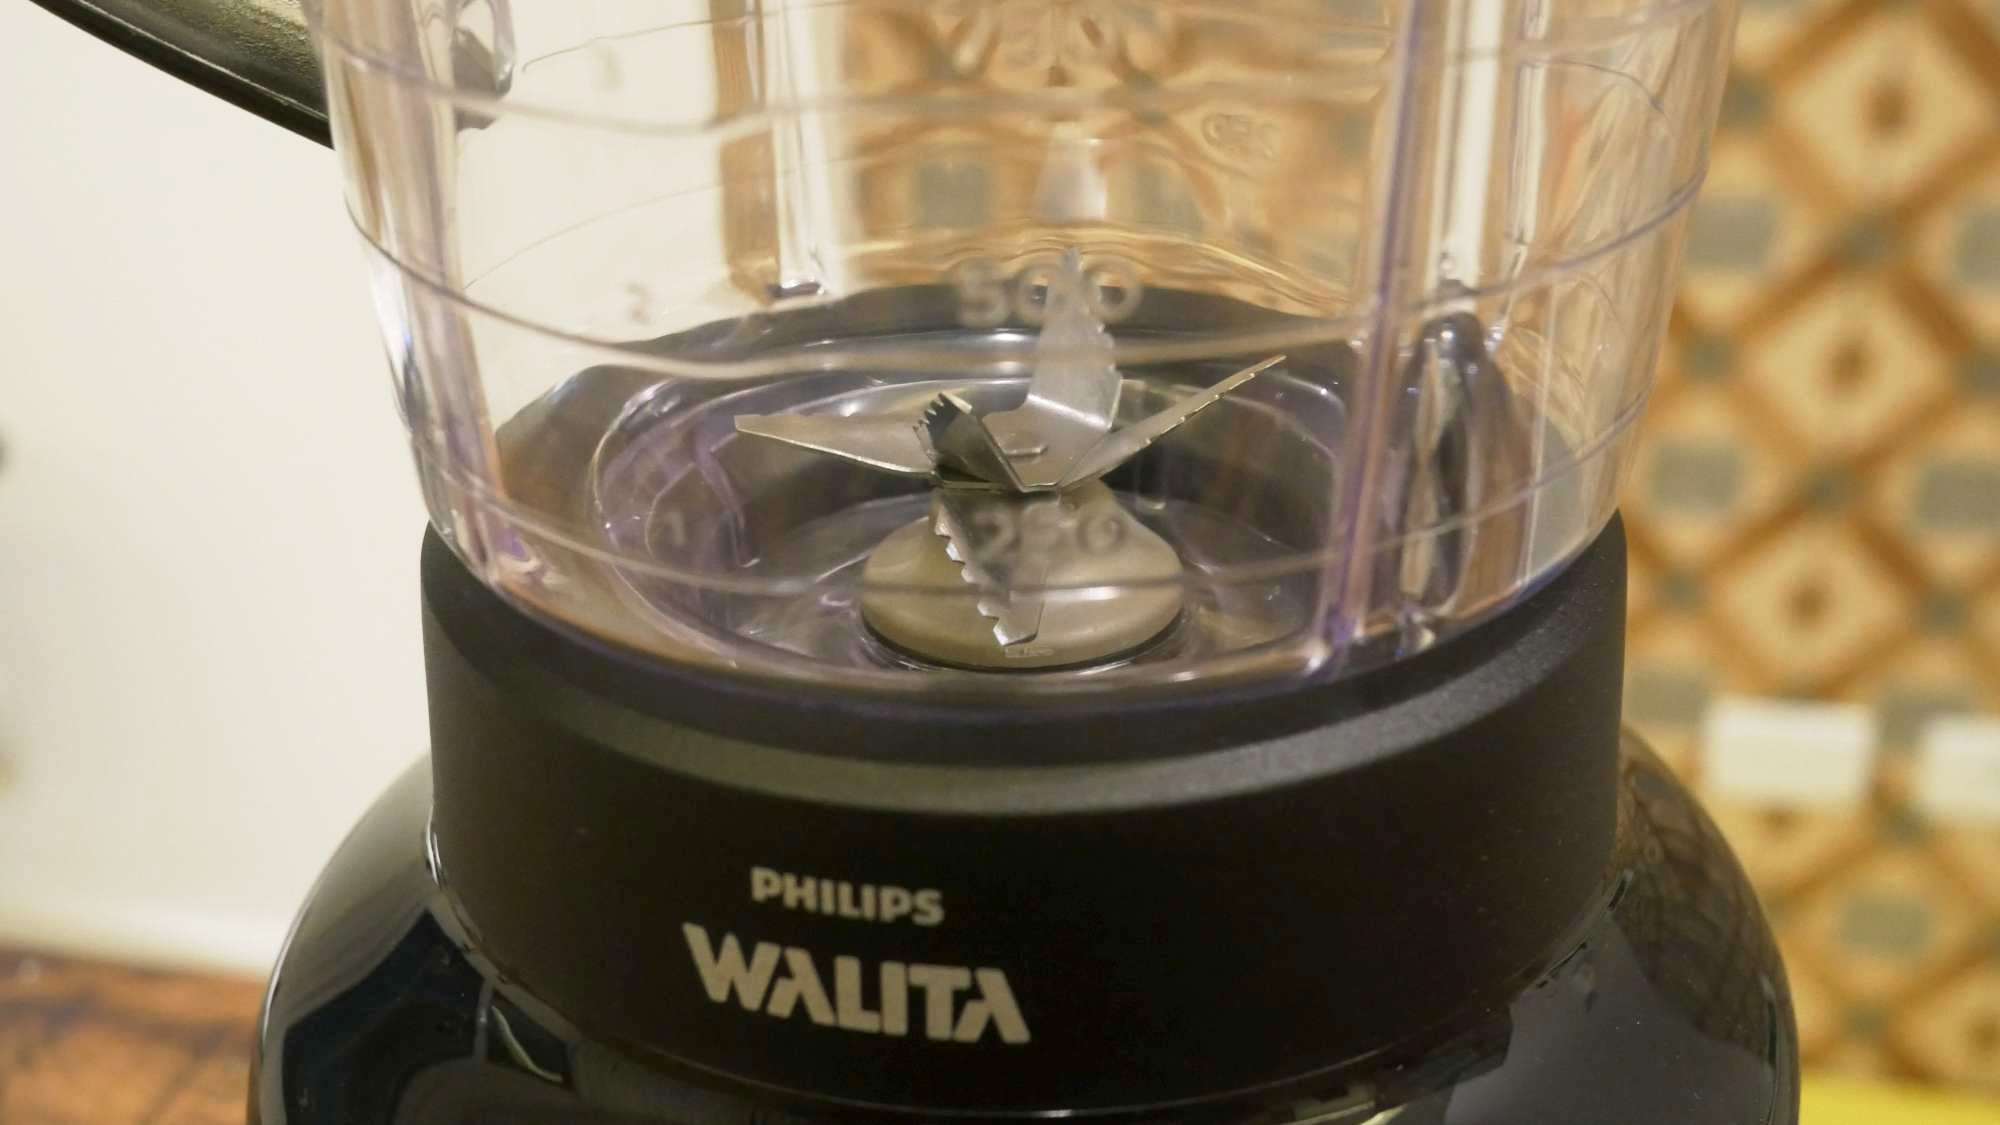 Liquidificador philips walita problend 6 ri2134 com 5 velocidades 700w Avaliacao De Liquidificador Philips Walita Linha Viva Problend 6 Harpyja